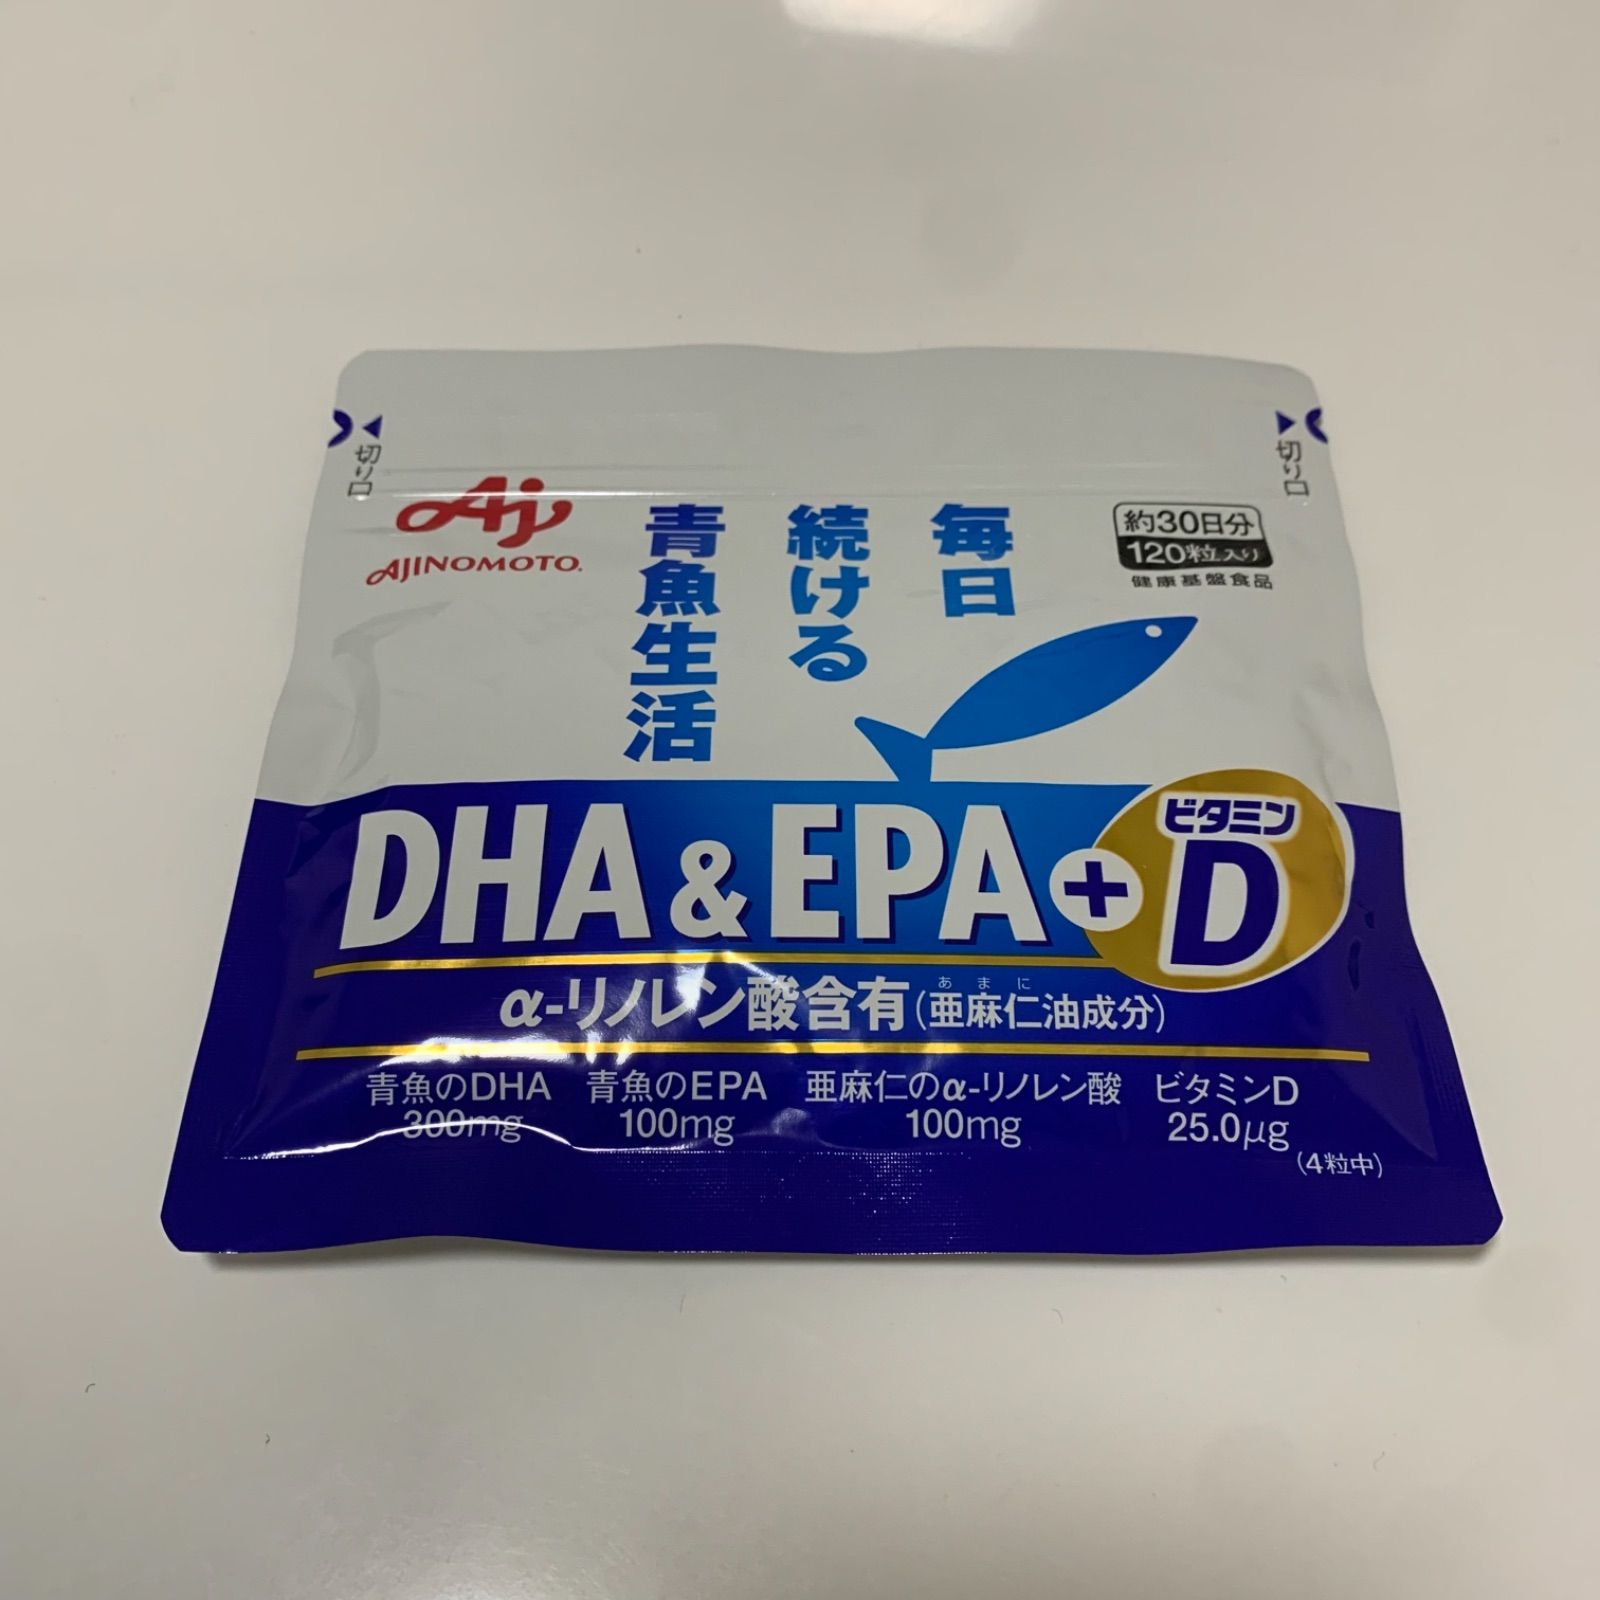 DHAEPA+ビタミンD 120粒入り - 健康用品